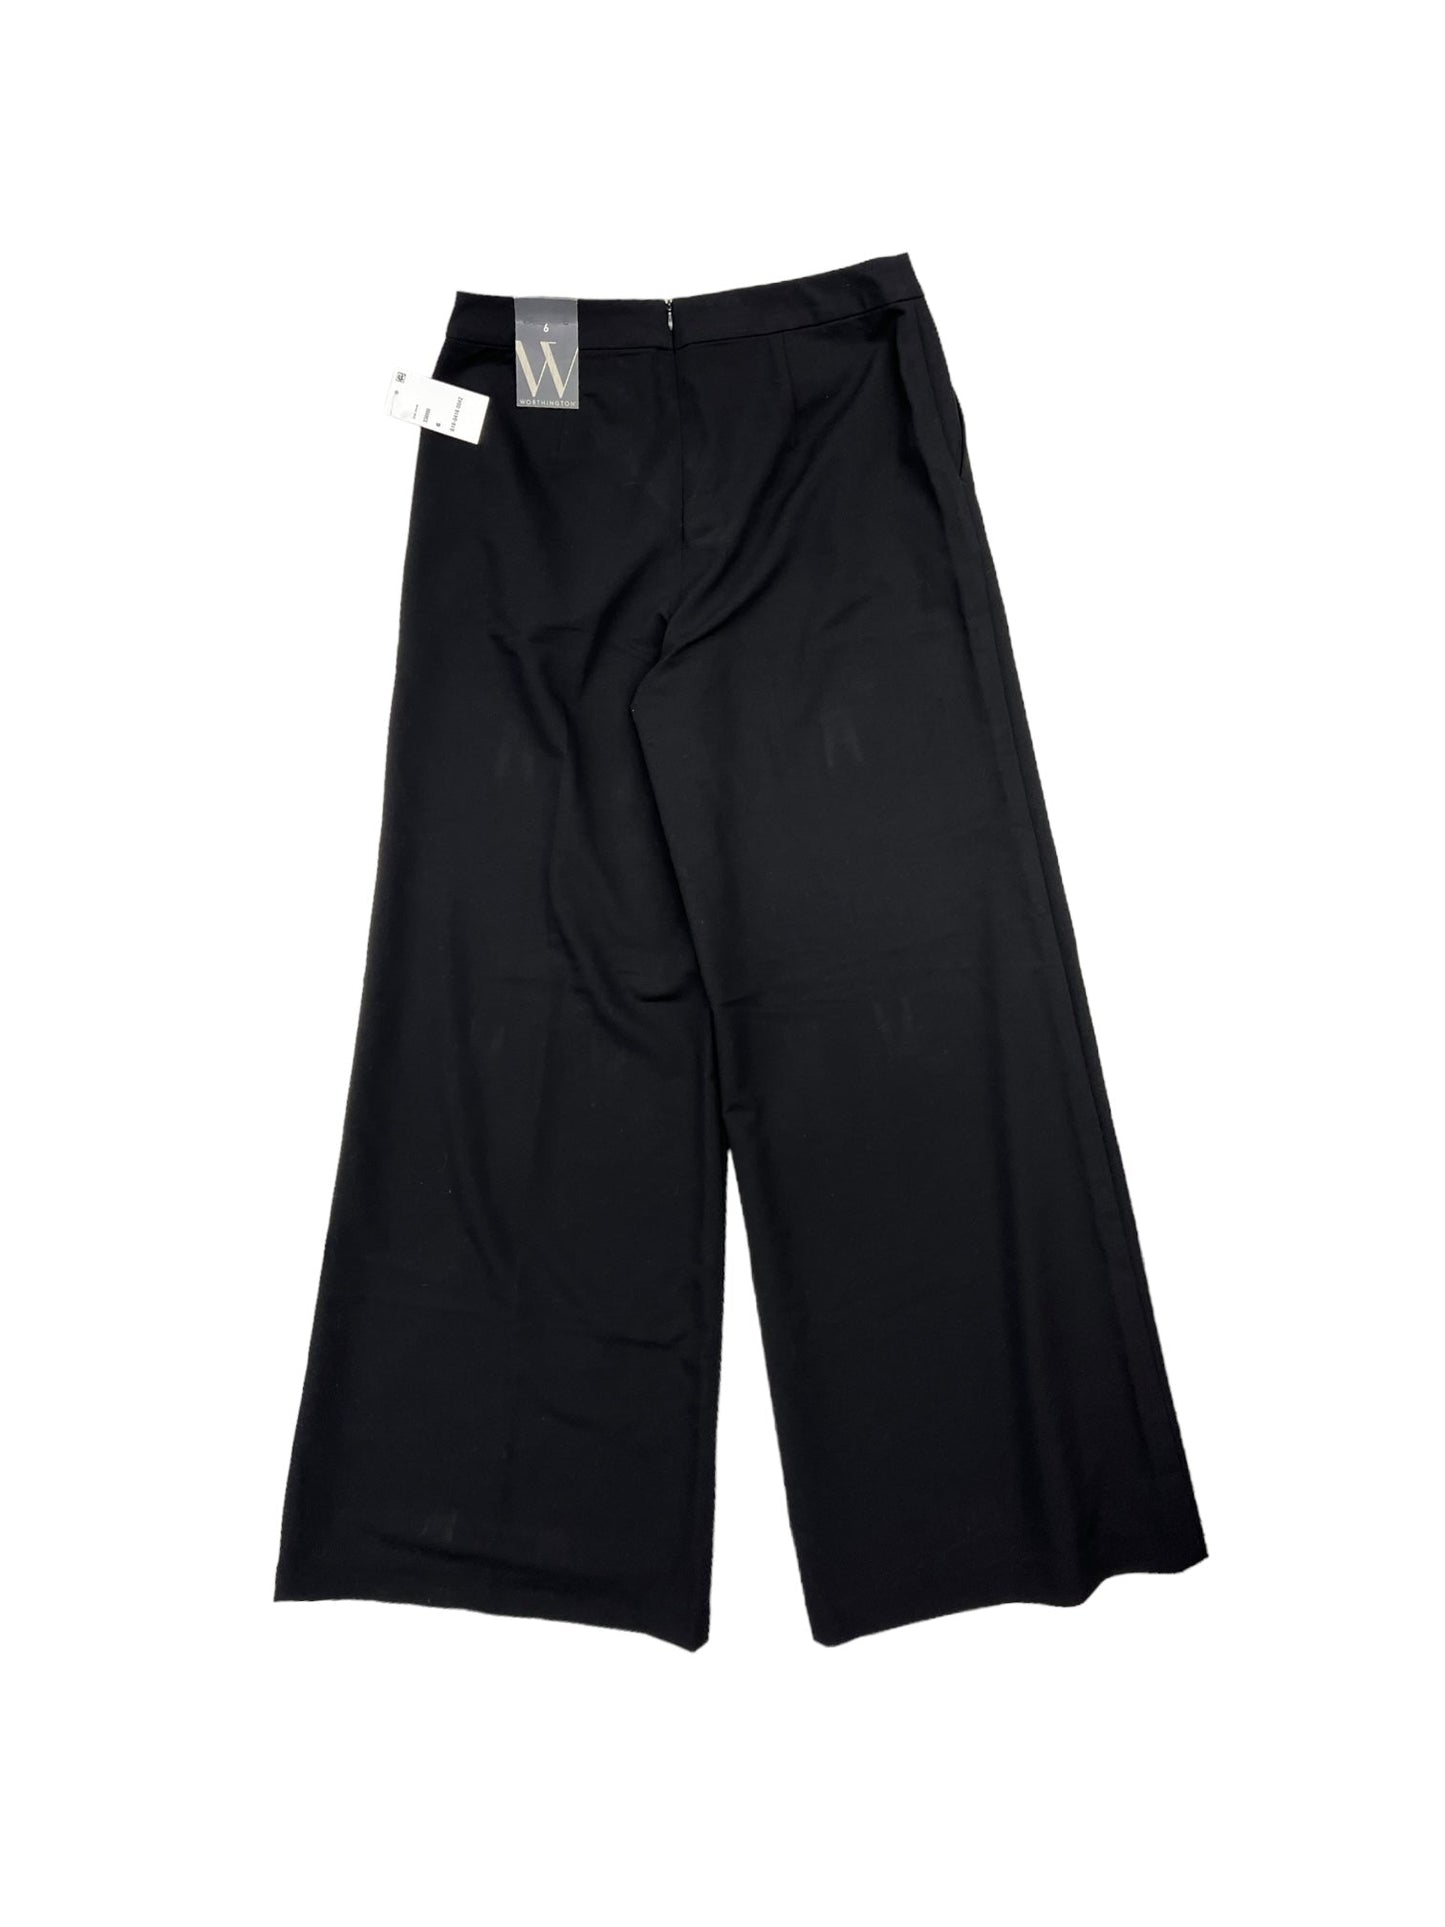 Black Pants Dress Worthington, Size 6